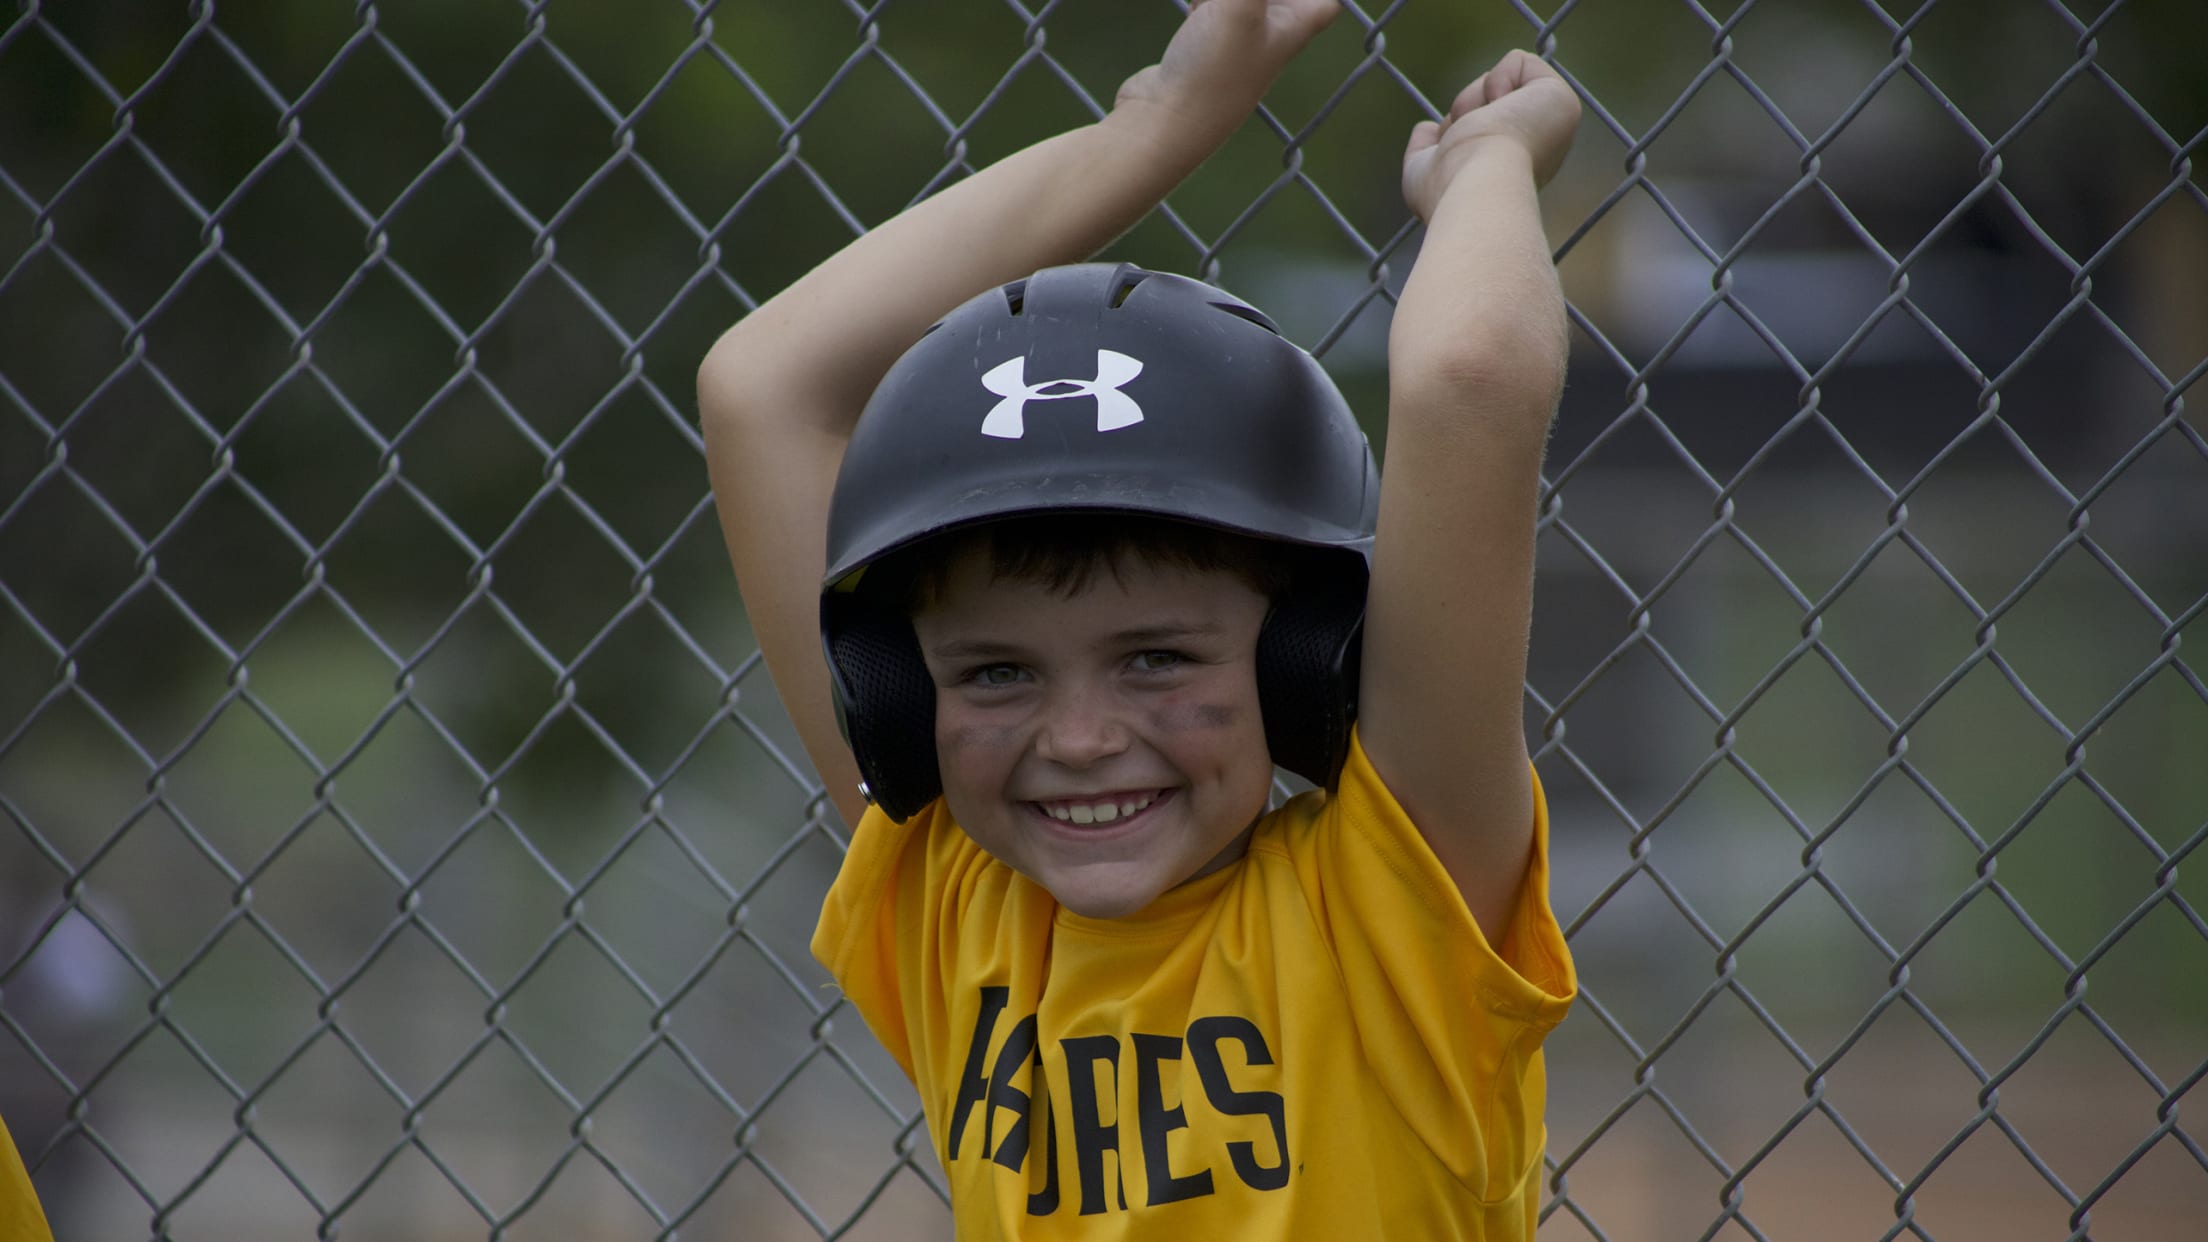 Padres Baseball & Softball Camps - Tinybeans